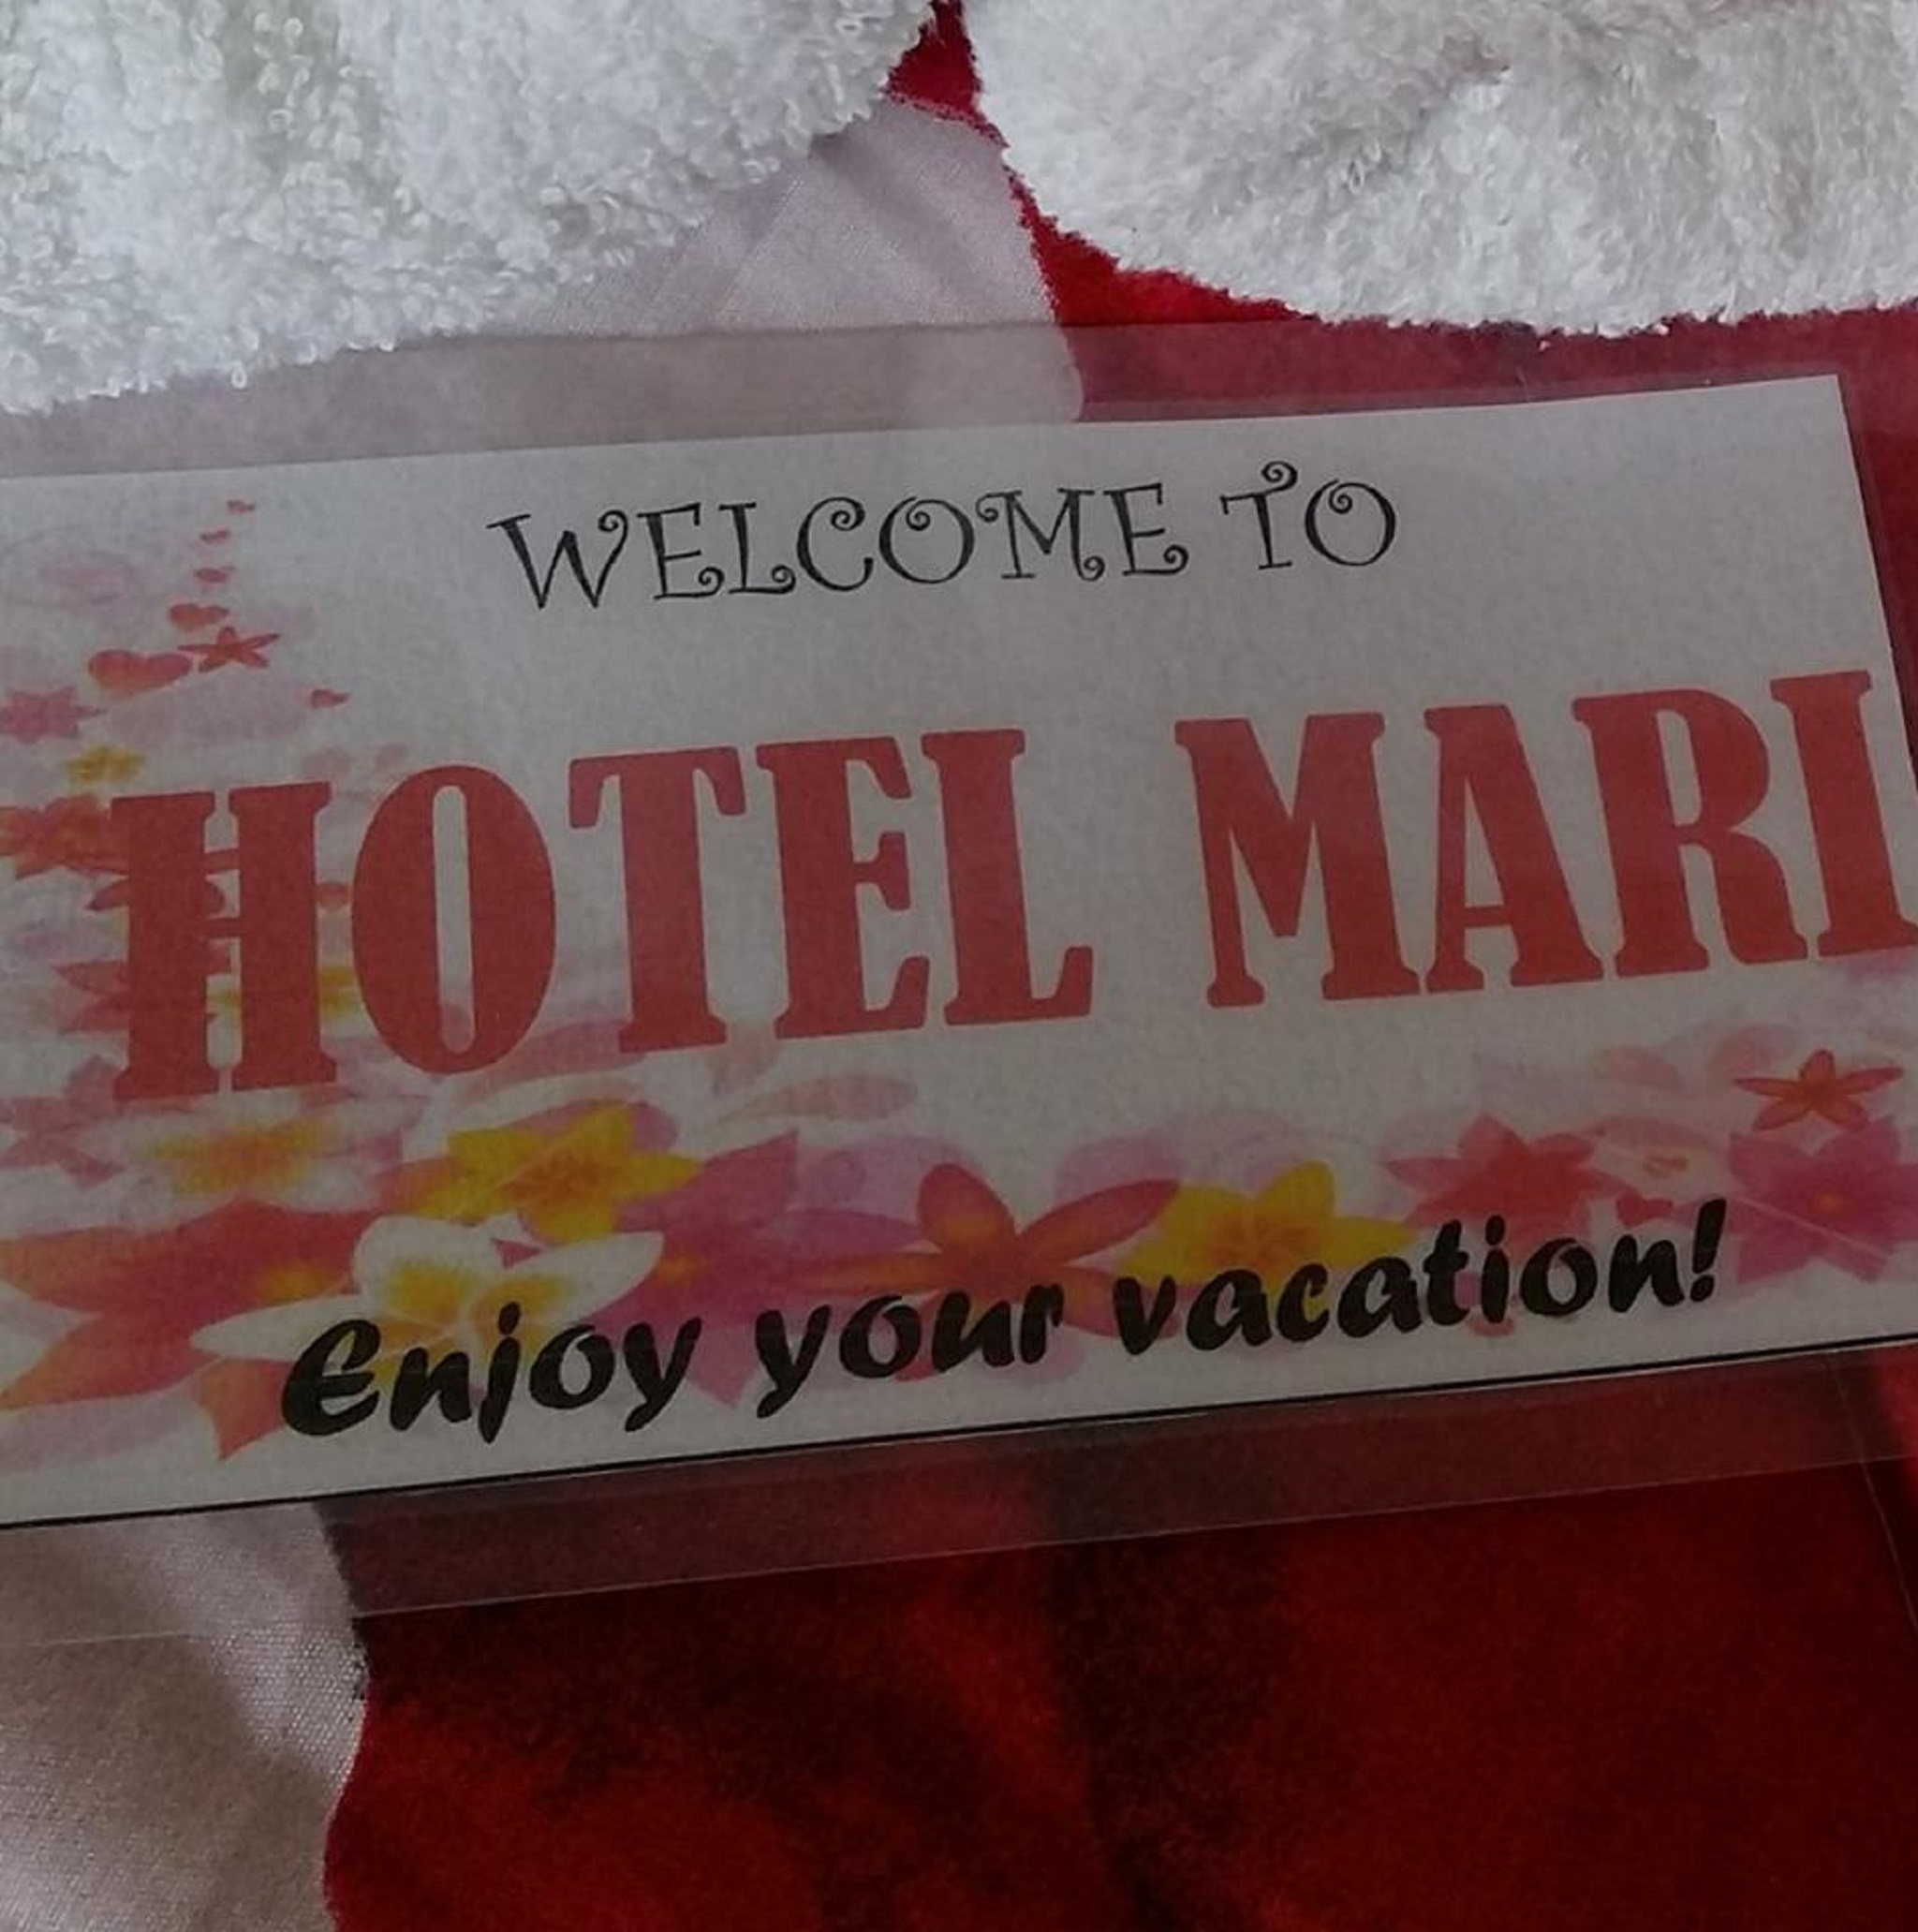 Hotel Mari